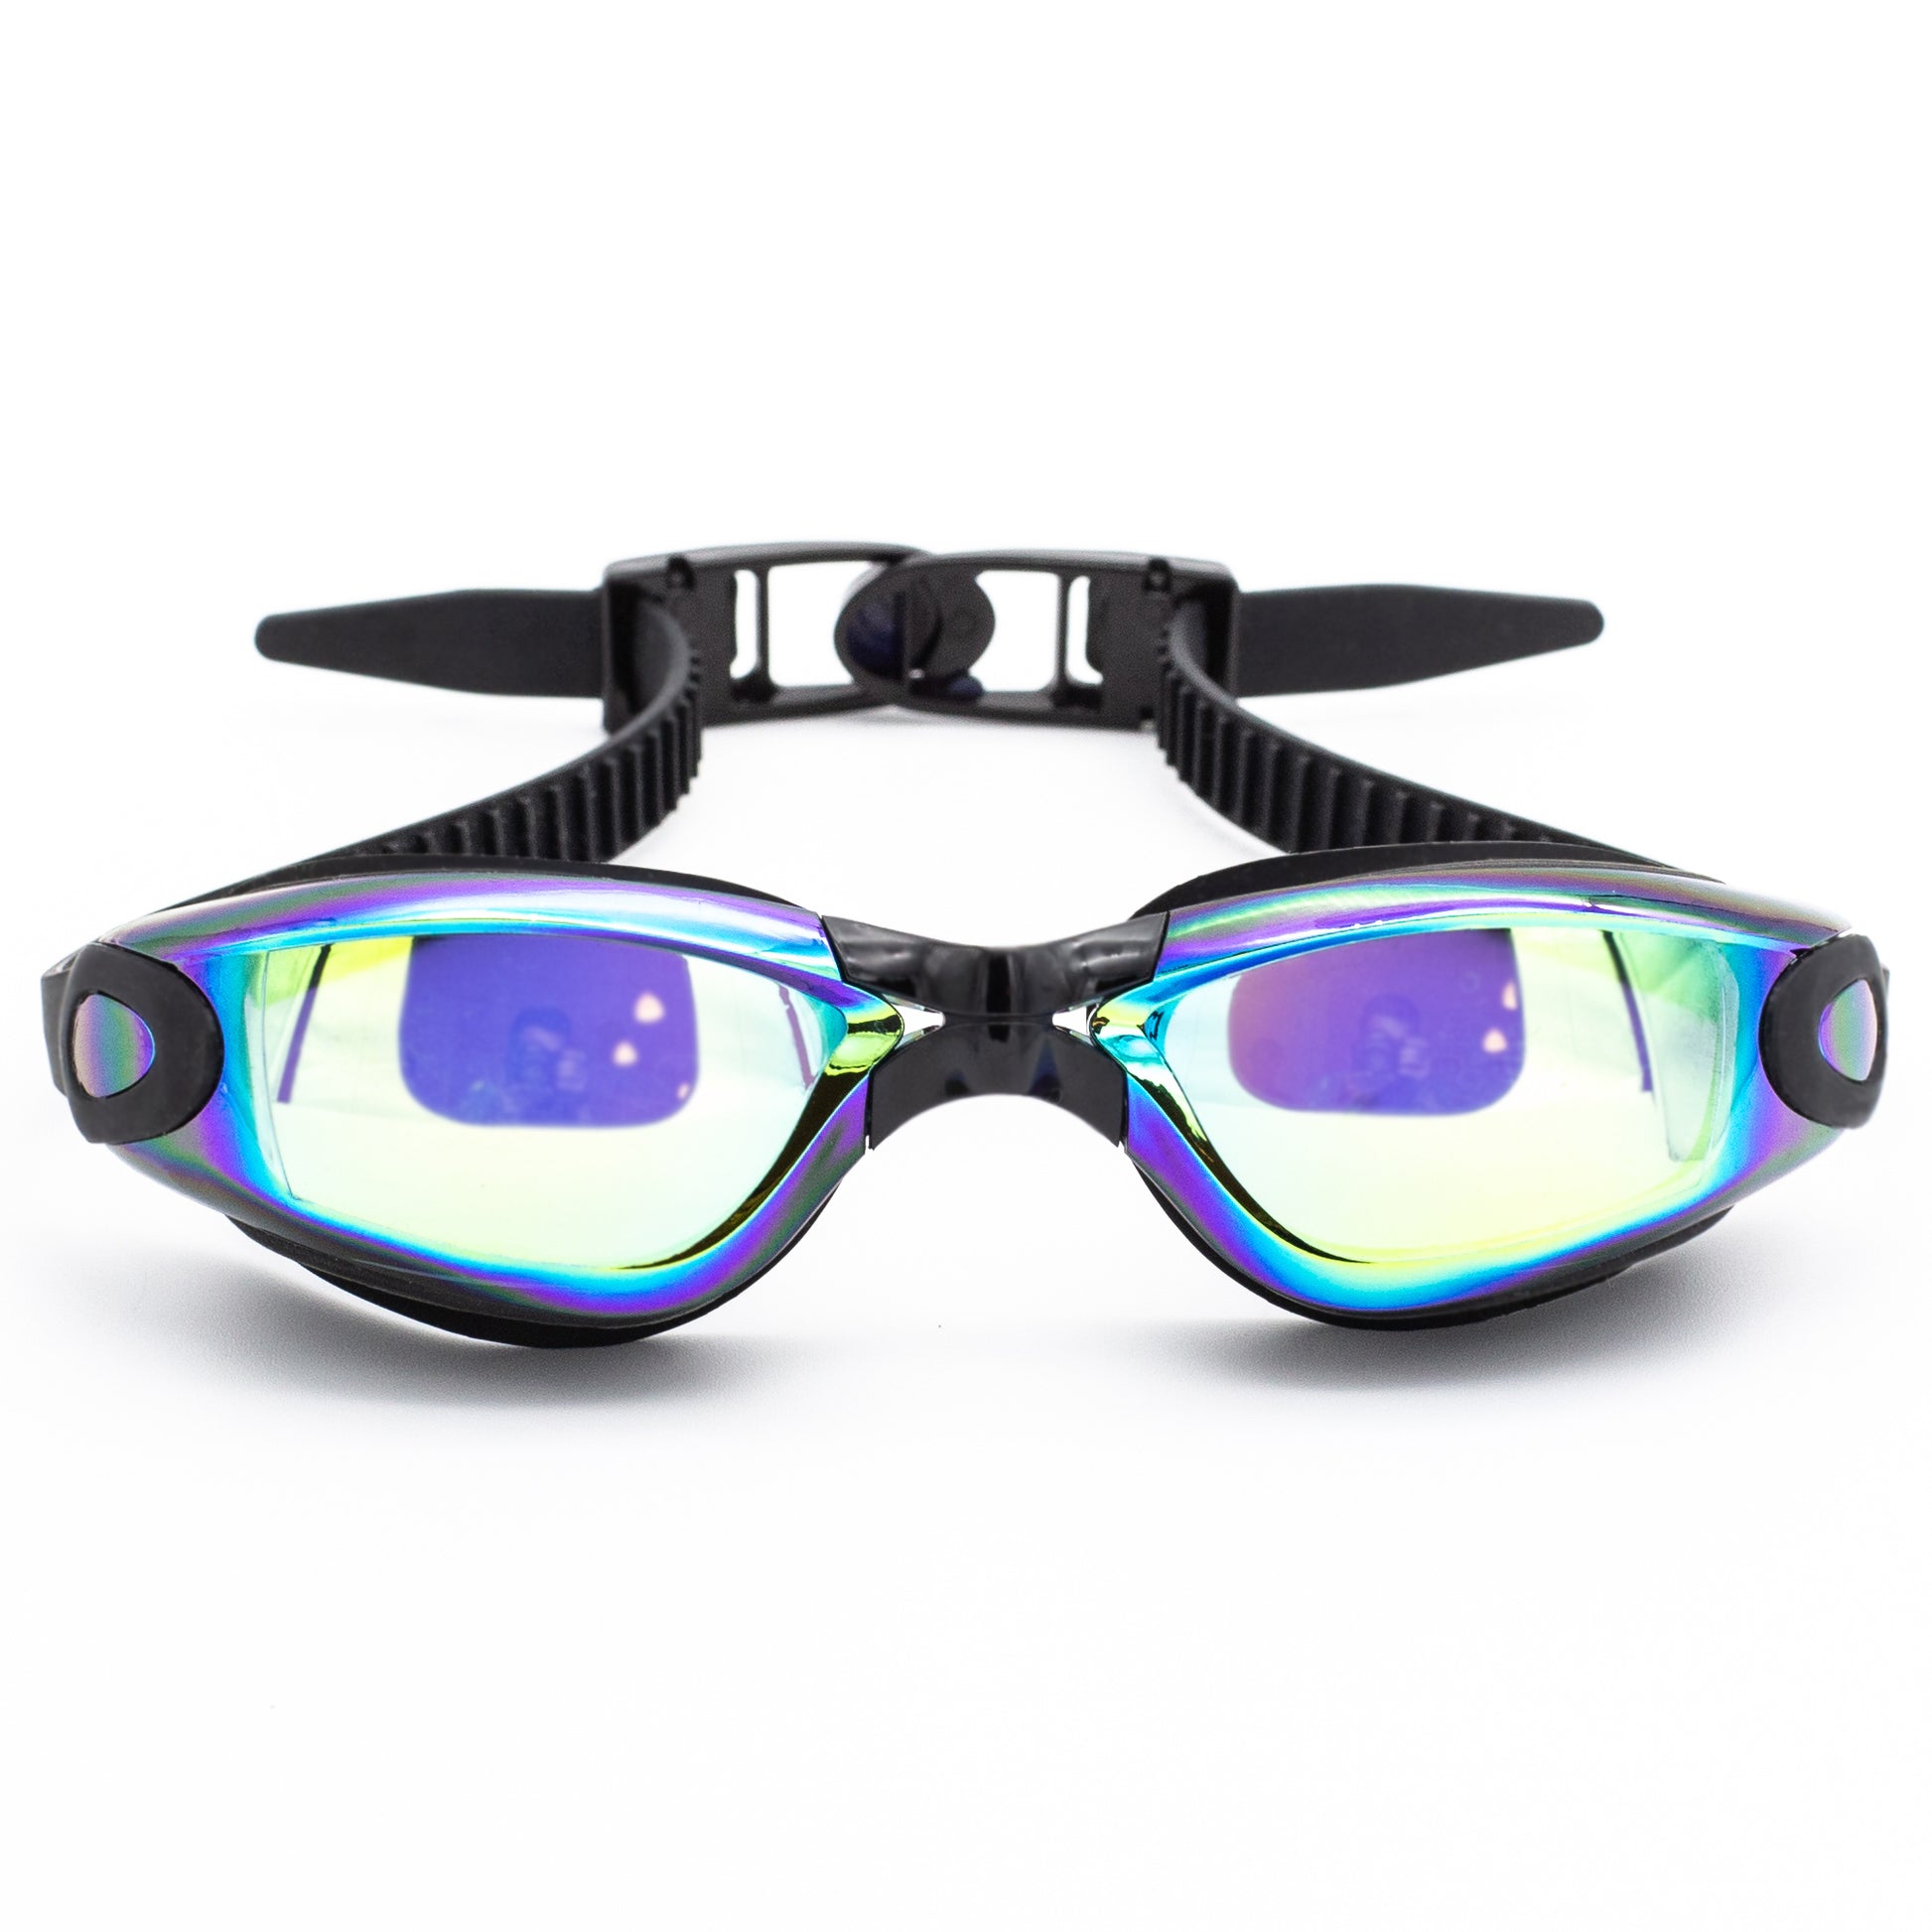 Vazquez NeroNautica Black Adult Swimming Goggles - High-Performance Affordable Cheap Swim Goggles